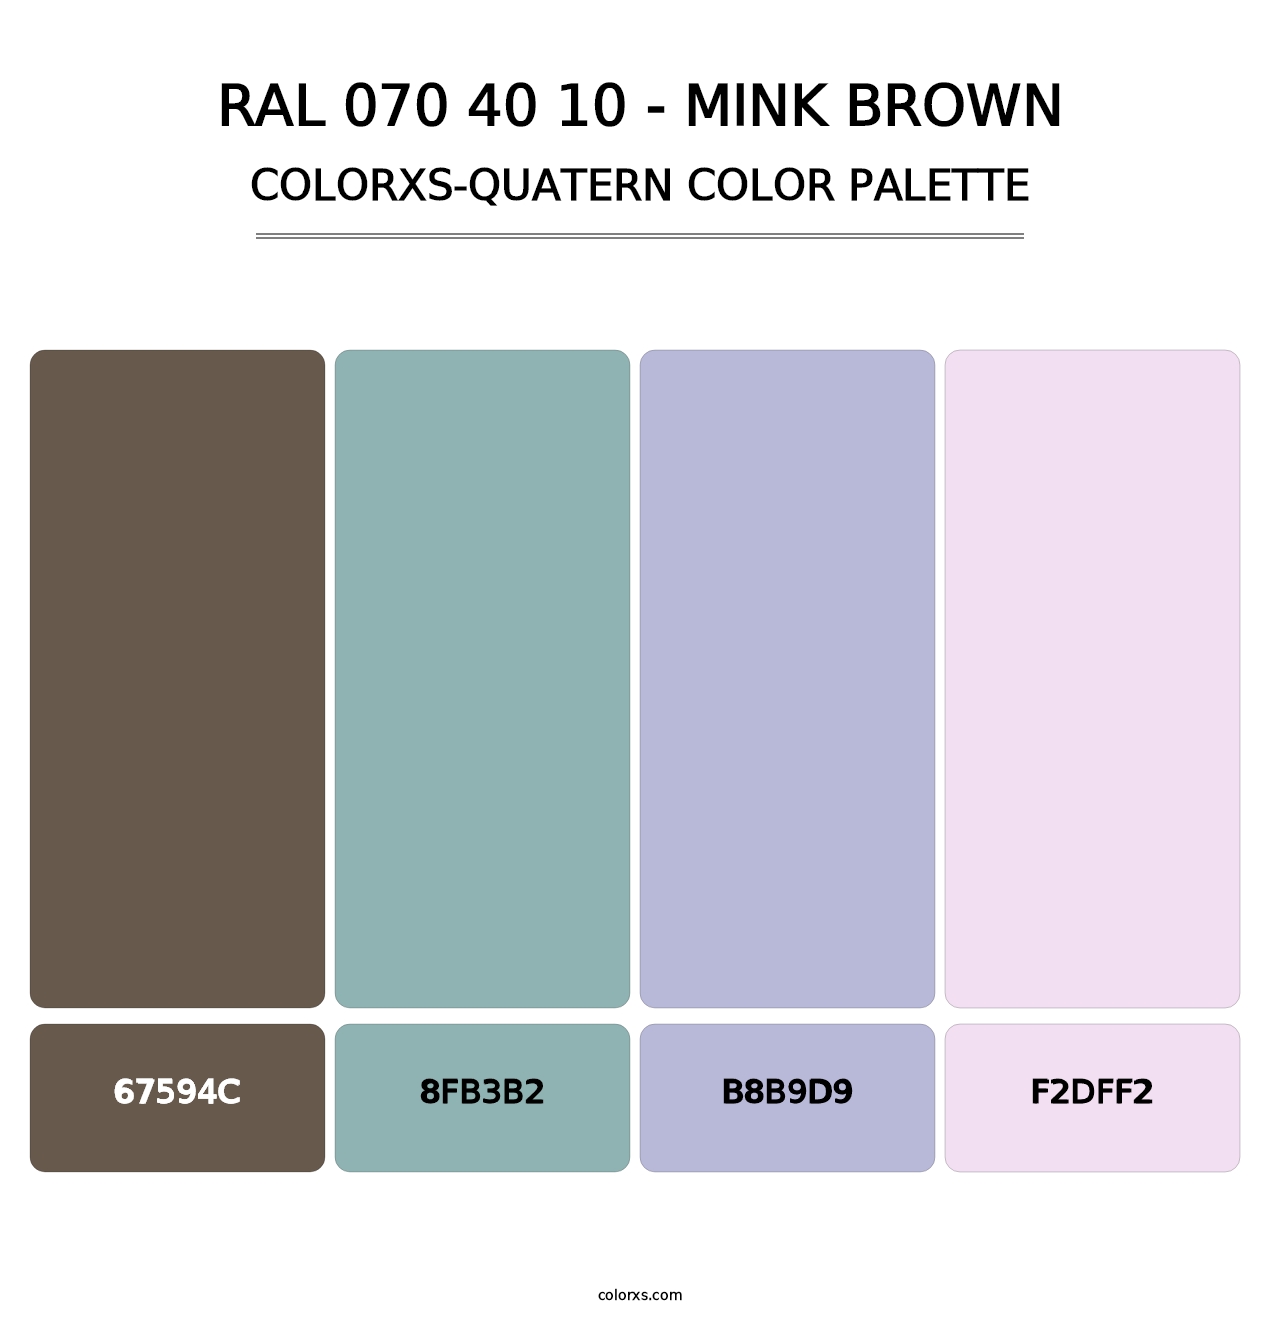 RAL 070 40 10 - Mink Brown - Colorxs Quatern Palette